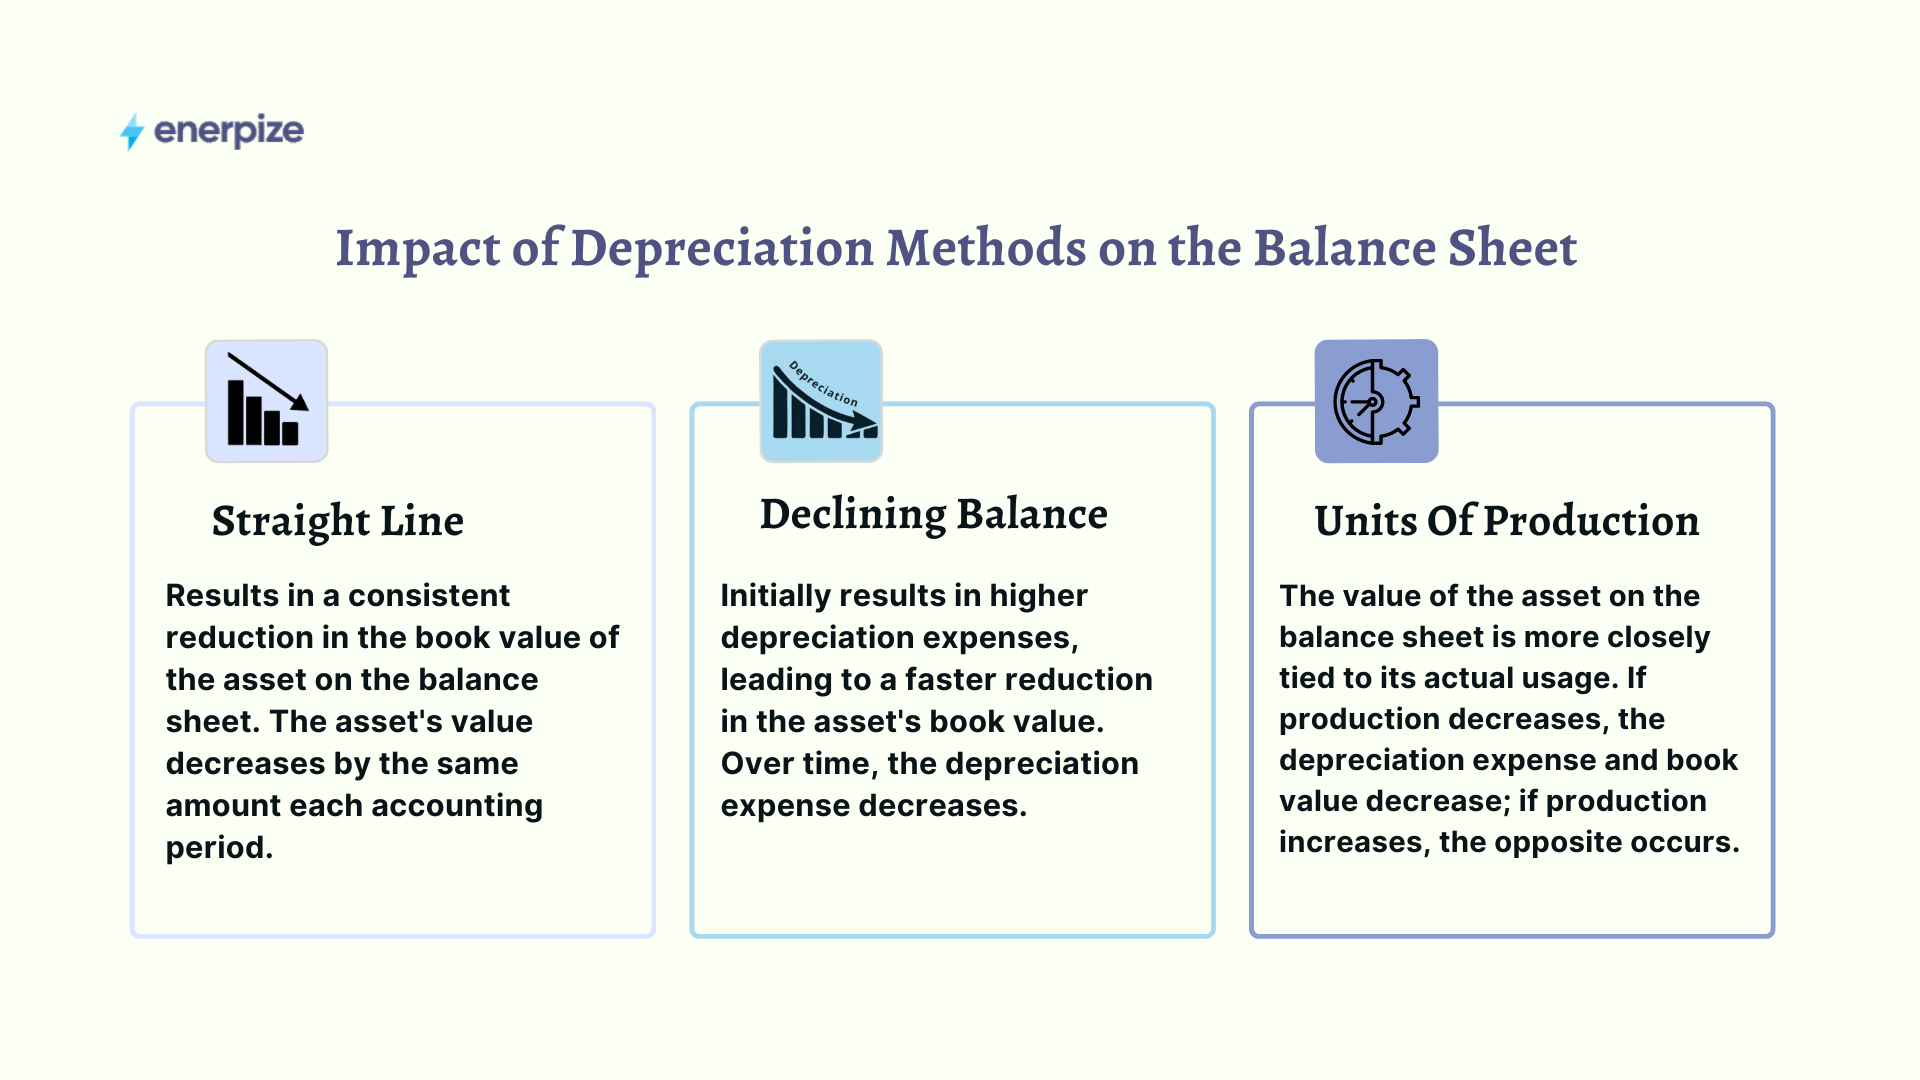 Depreciation Methods Affect Asset Value on the Balance Sheet 